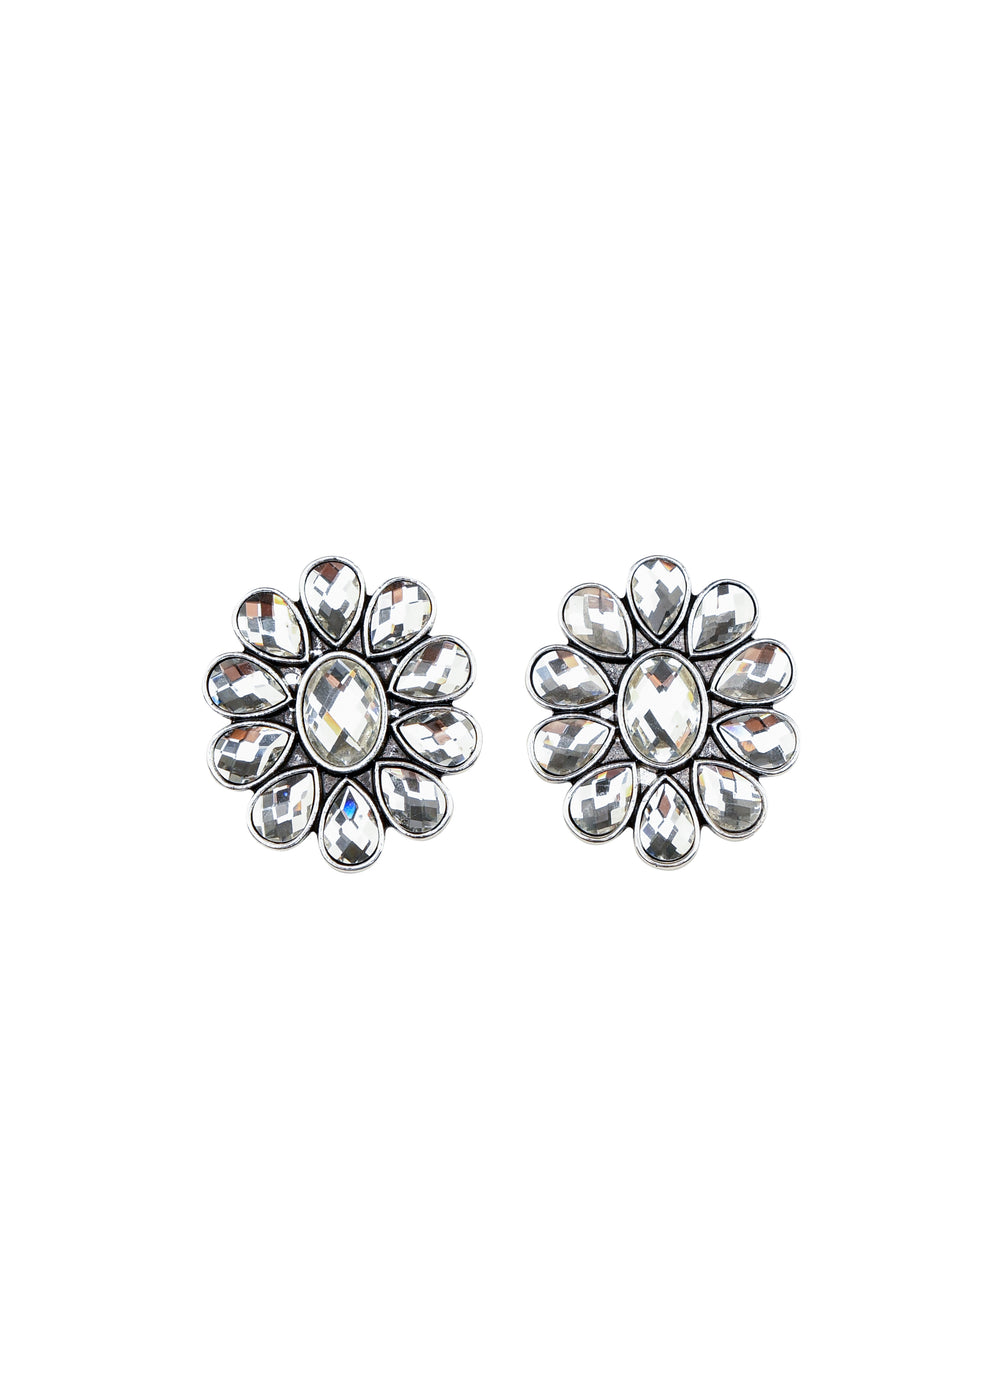 "Rhinestone Flower Cluster Post Earrings